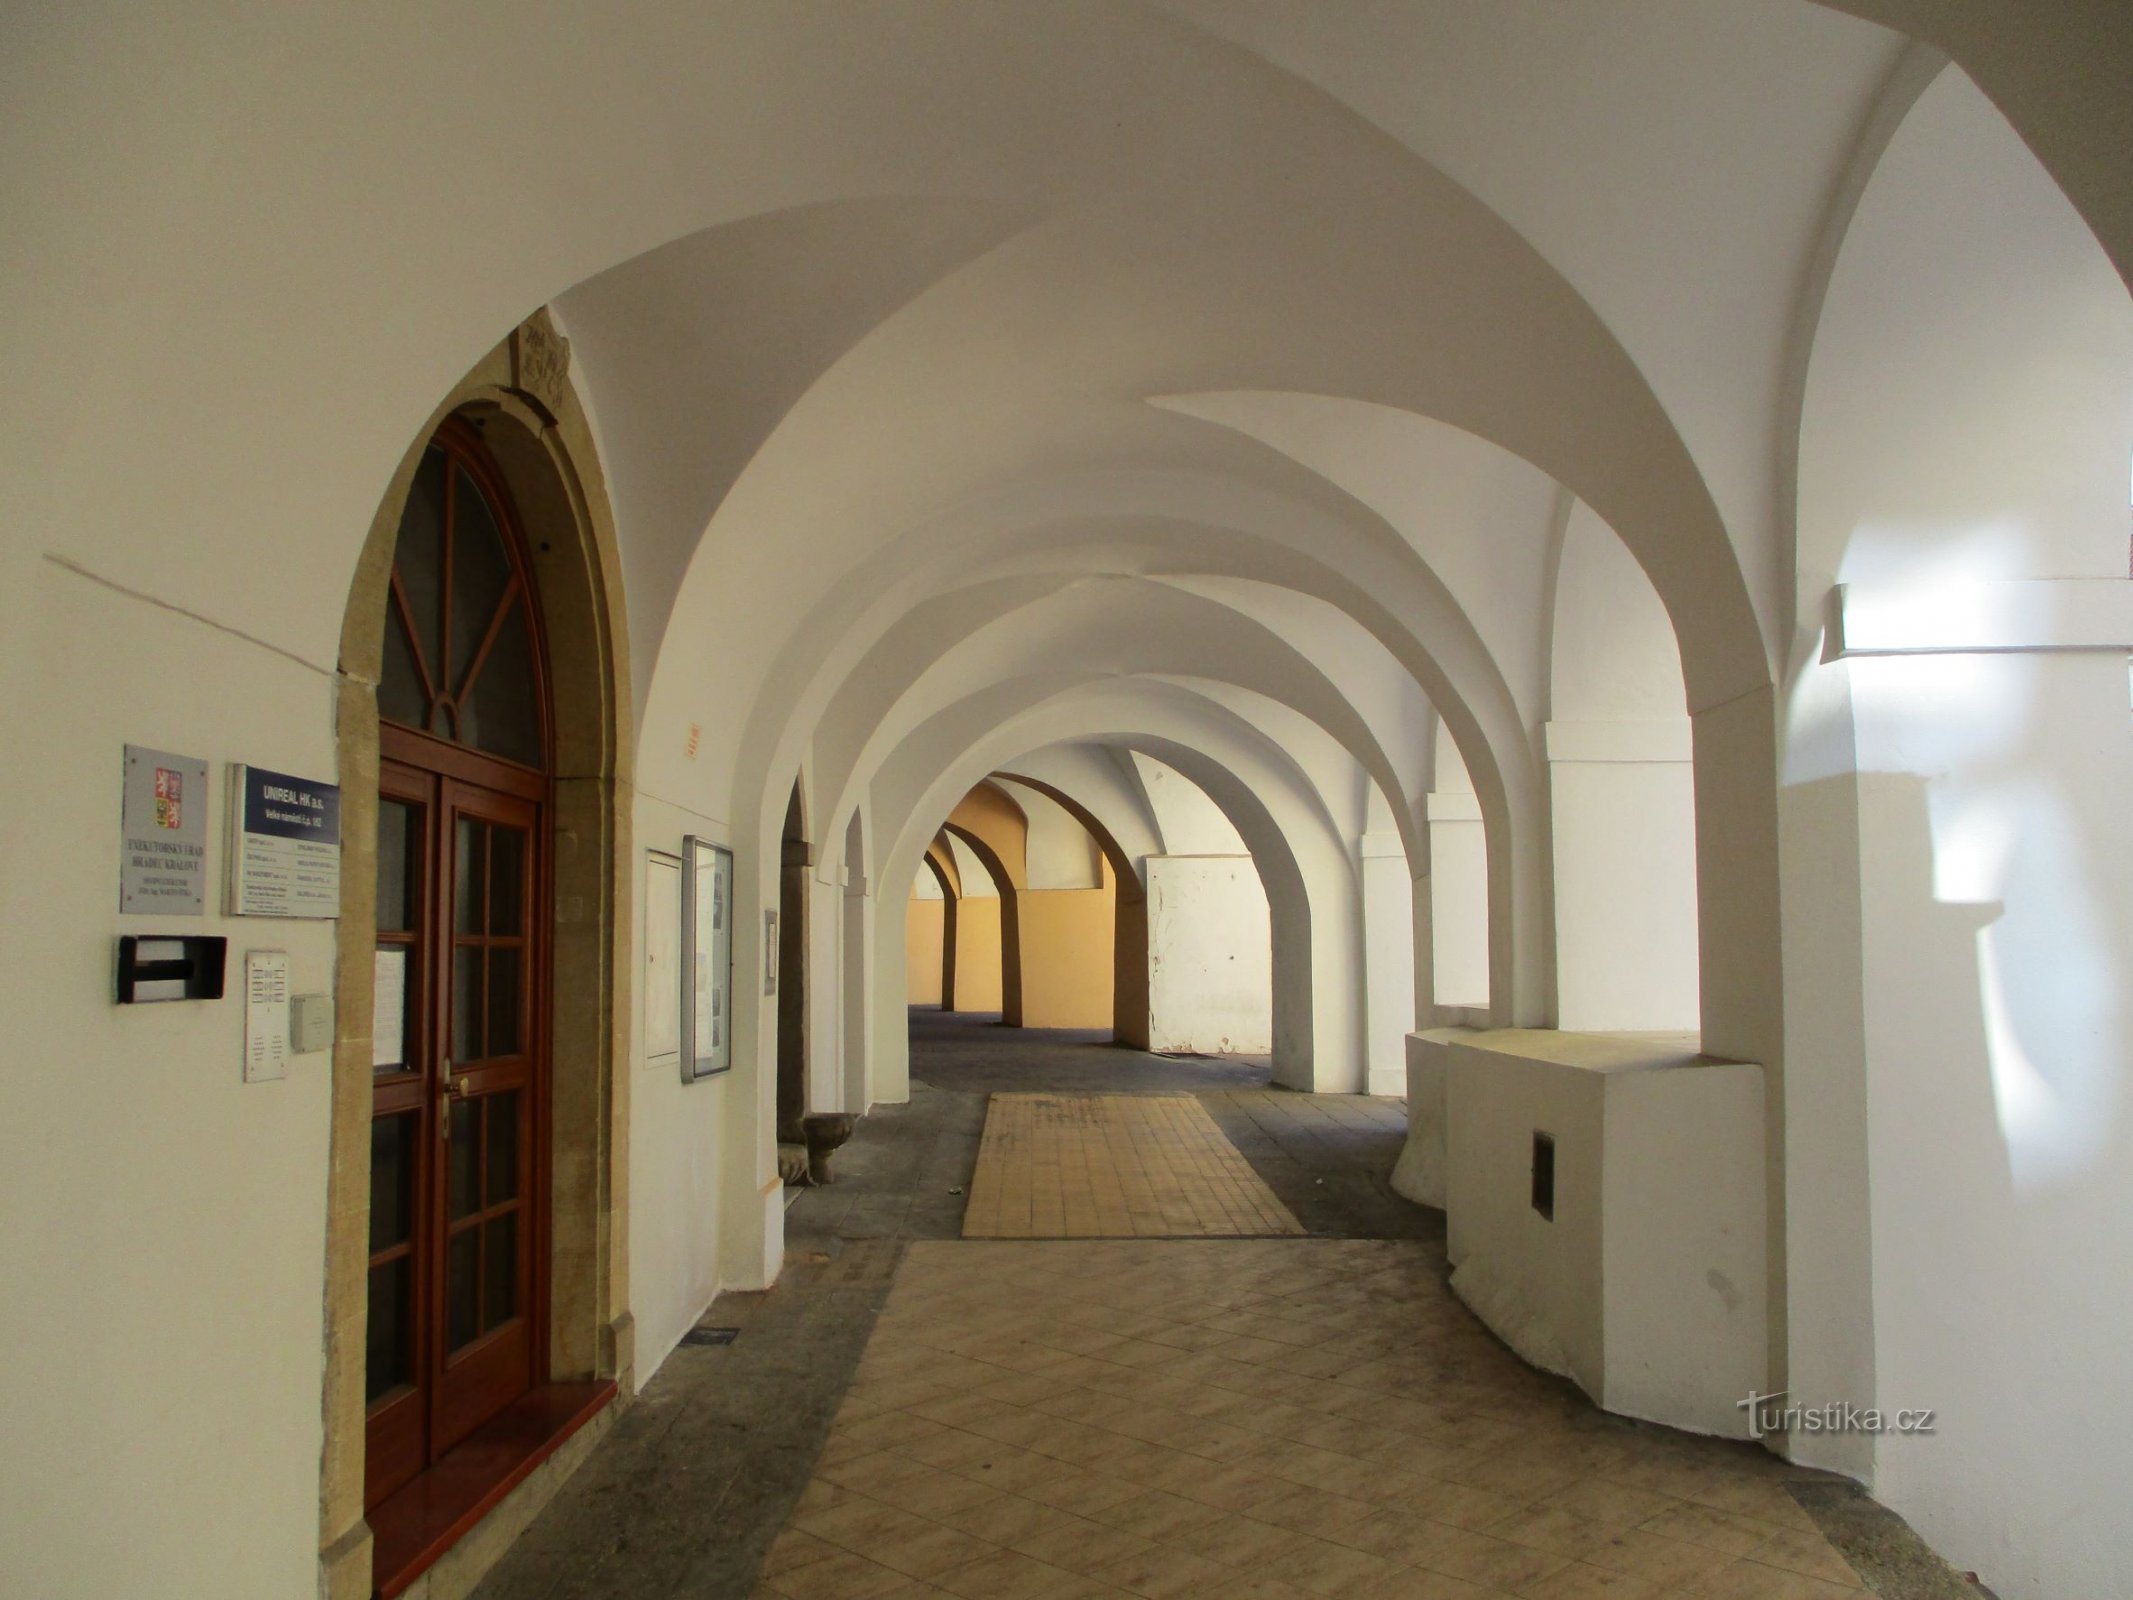 Grande salle du n° 162 (Hradec Králové, 25.4.2020/XNUMX/XNUMX)